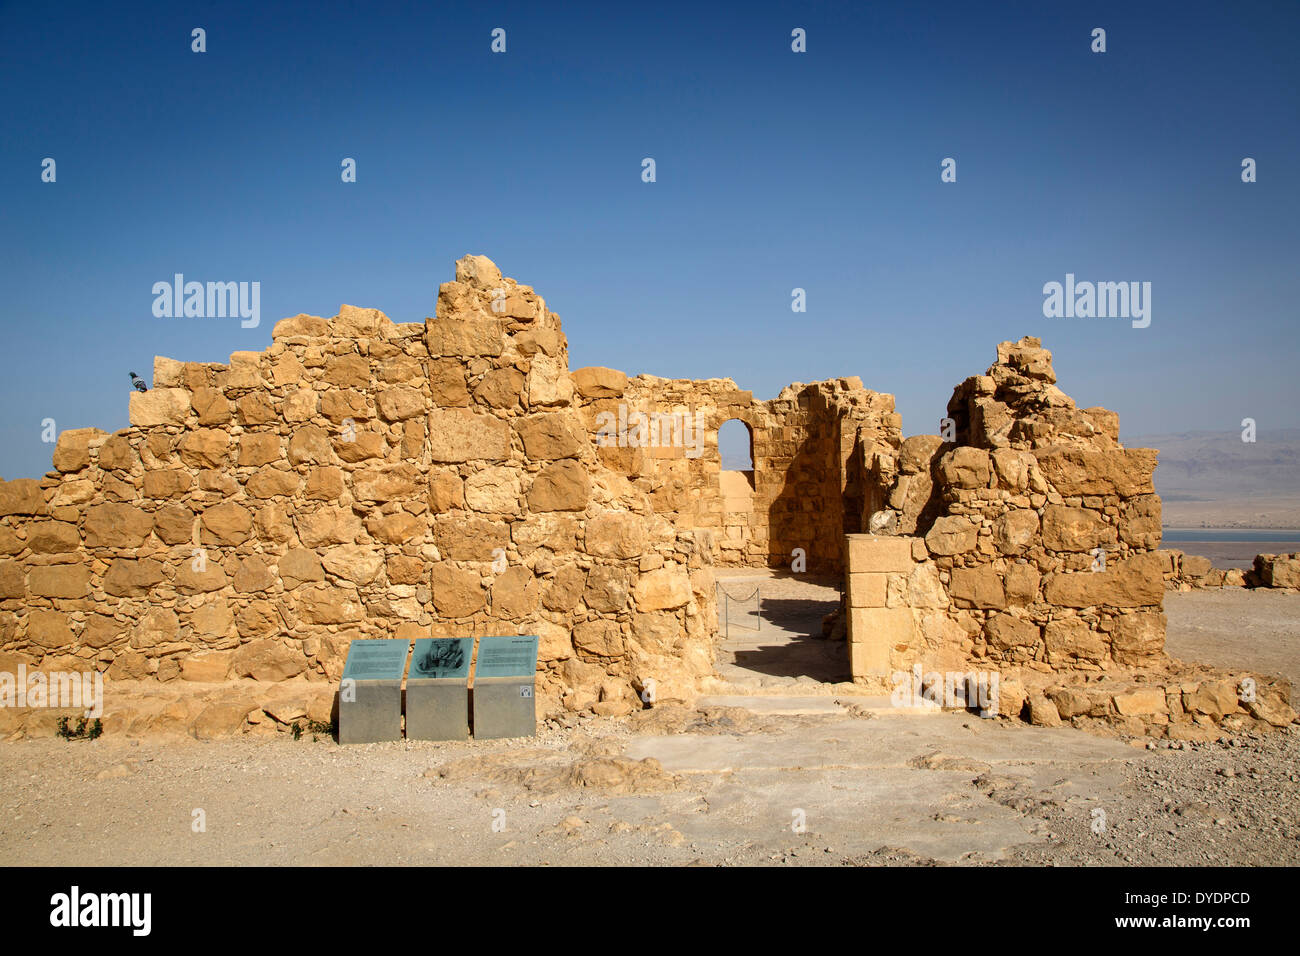 La forteresse de Massada au bord de le désert de Judée, en Israël. Banque D'Images